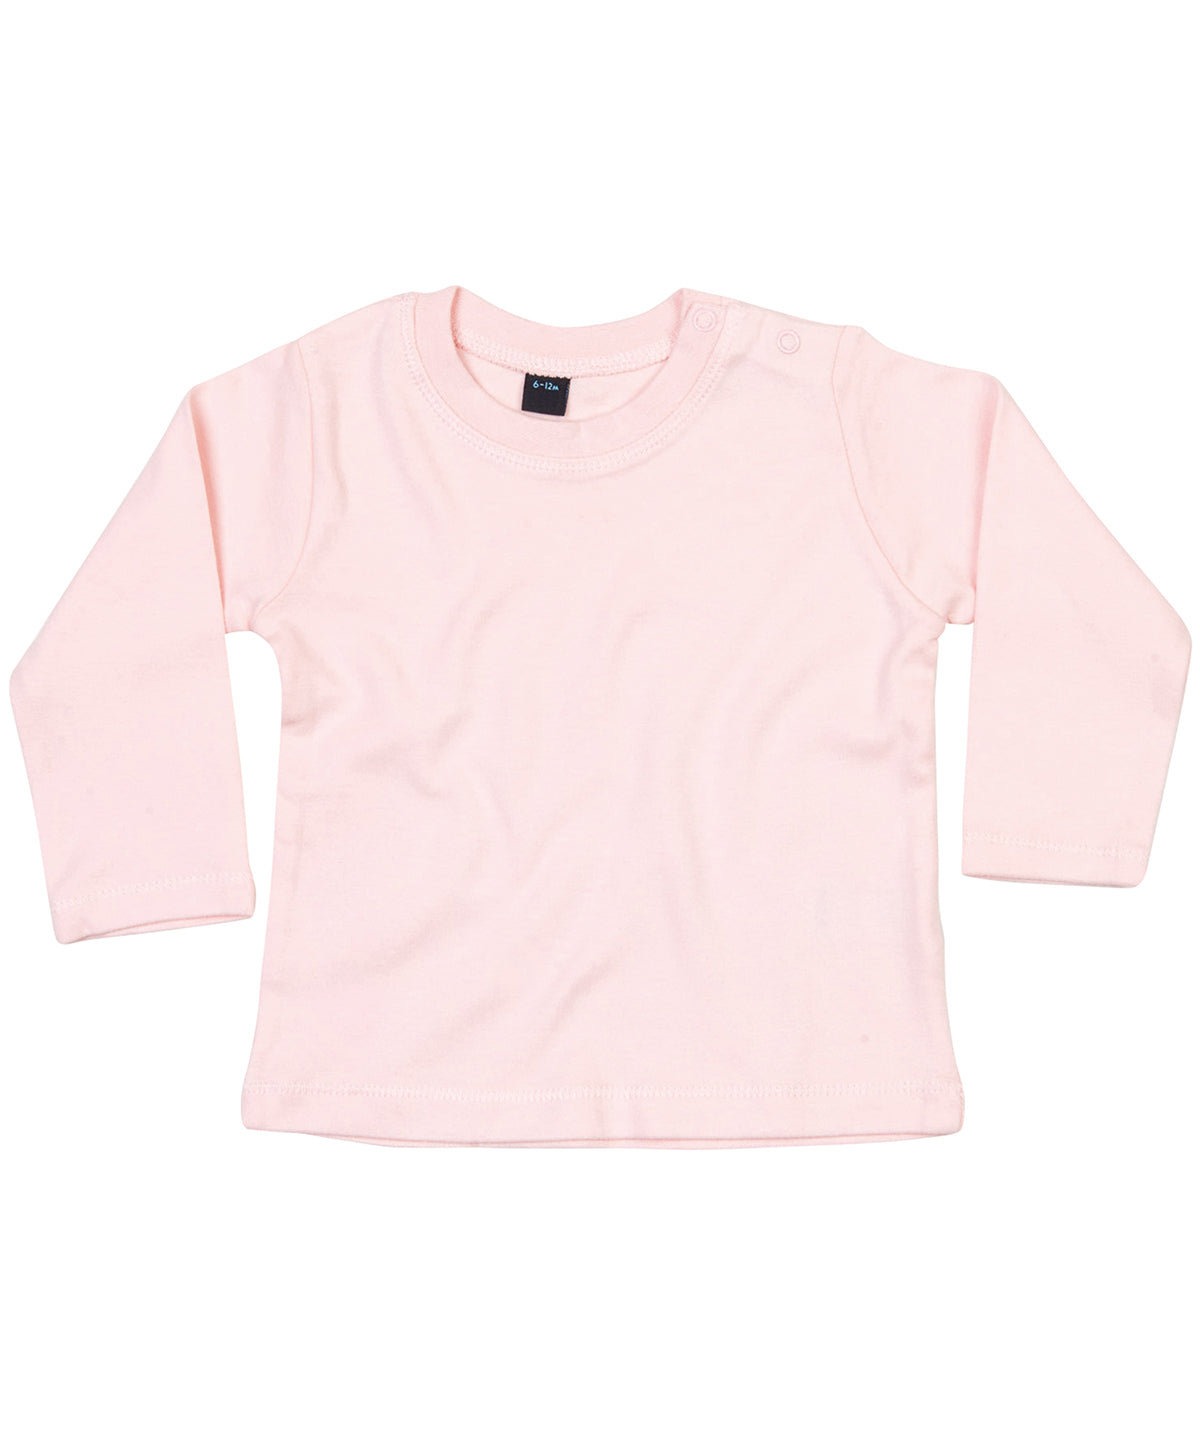 Personalised T-Shirts - Mid Pink Babybugz Baby long sleeve T